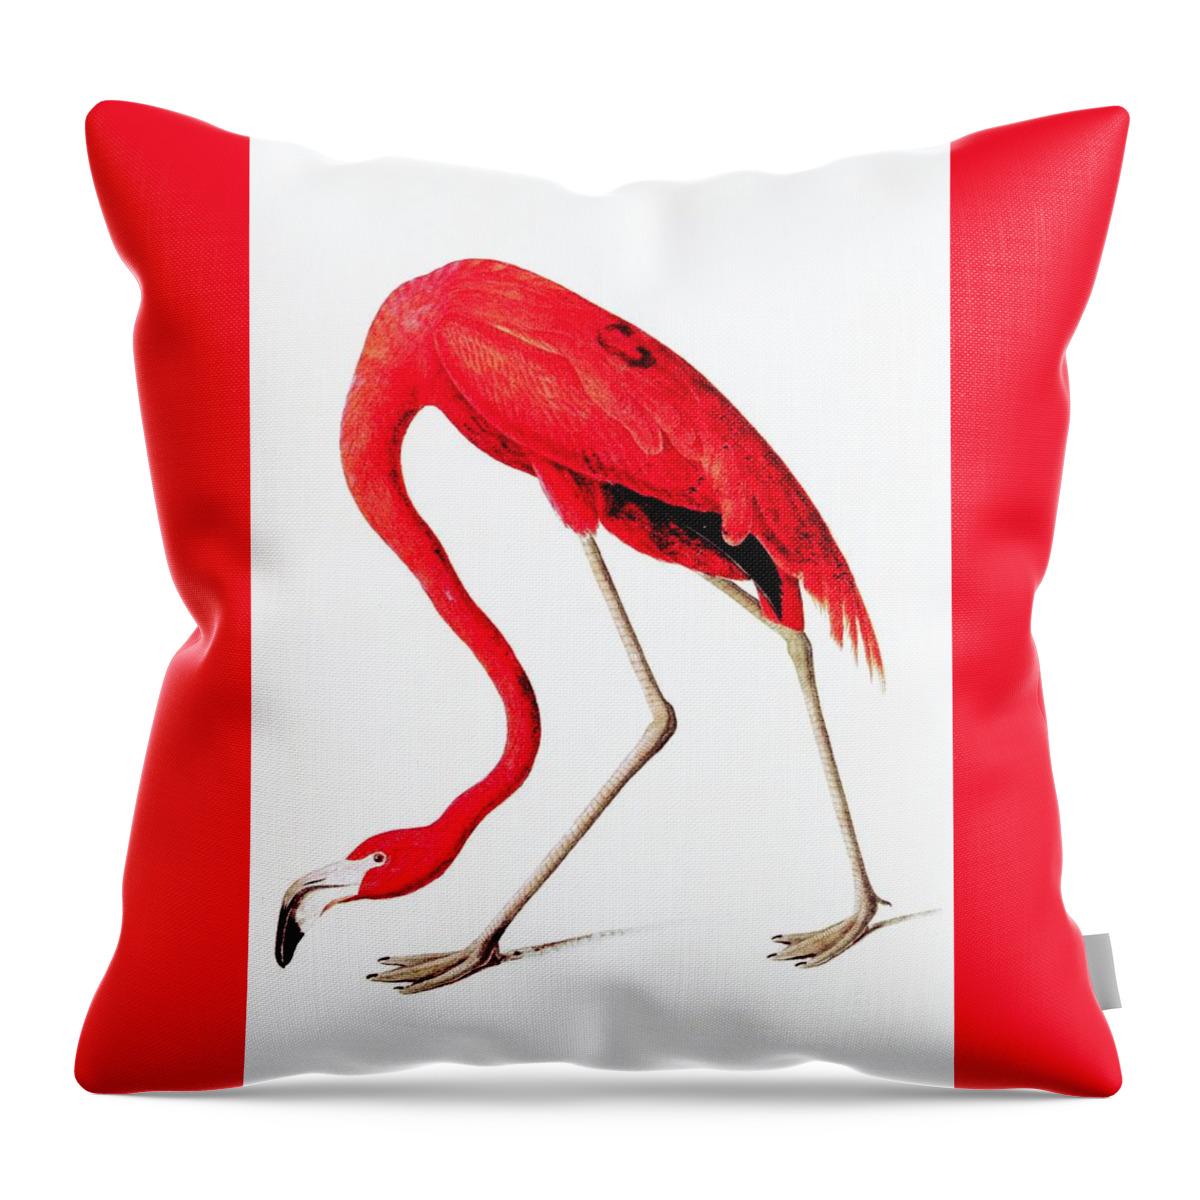  Vintage Throw Pillow featuring the digital art Red flamingo from Audubon by Heidi De Leeuw